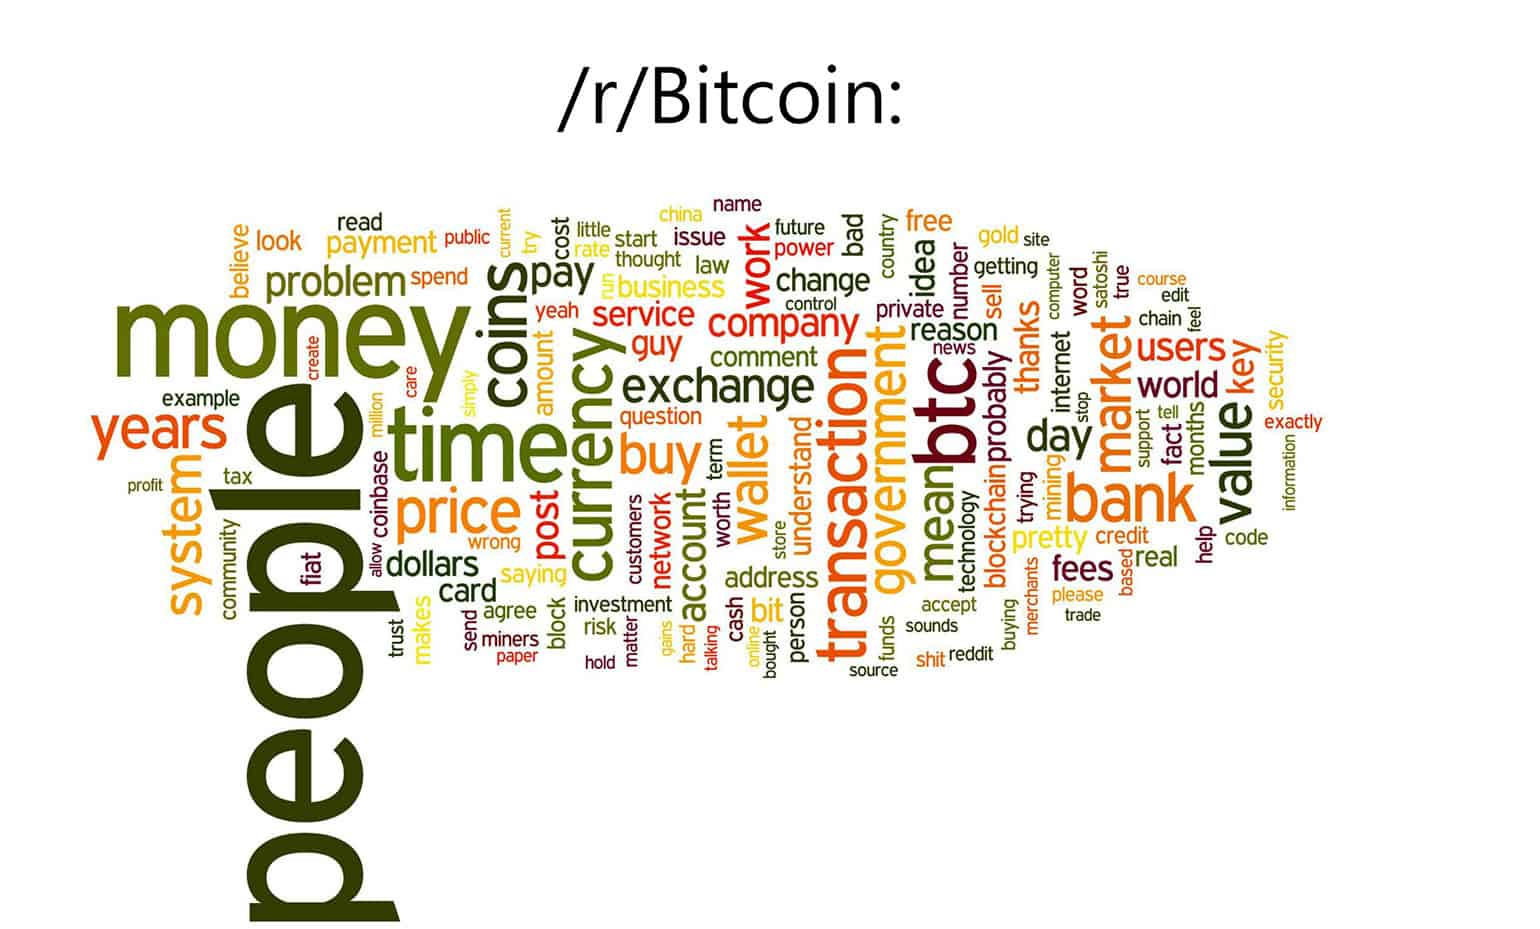 redit-bitcoin-word-cloud.jpg